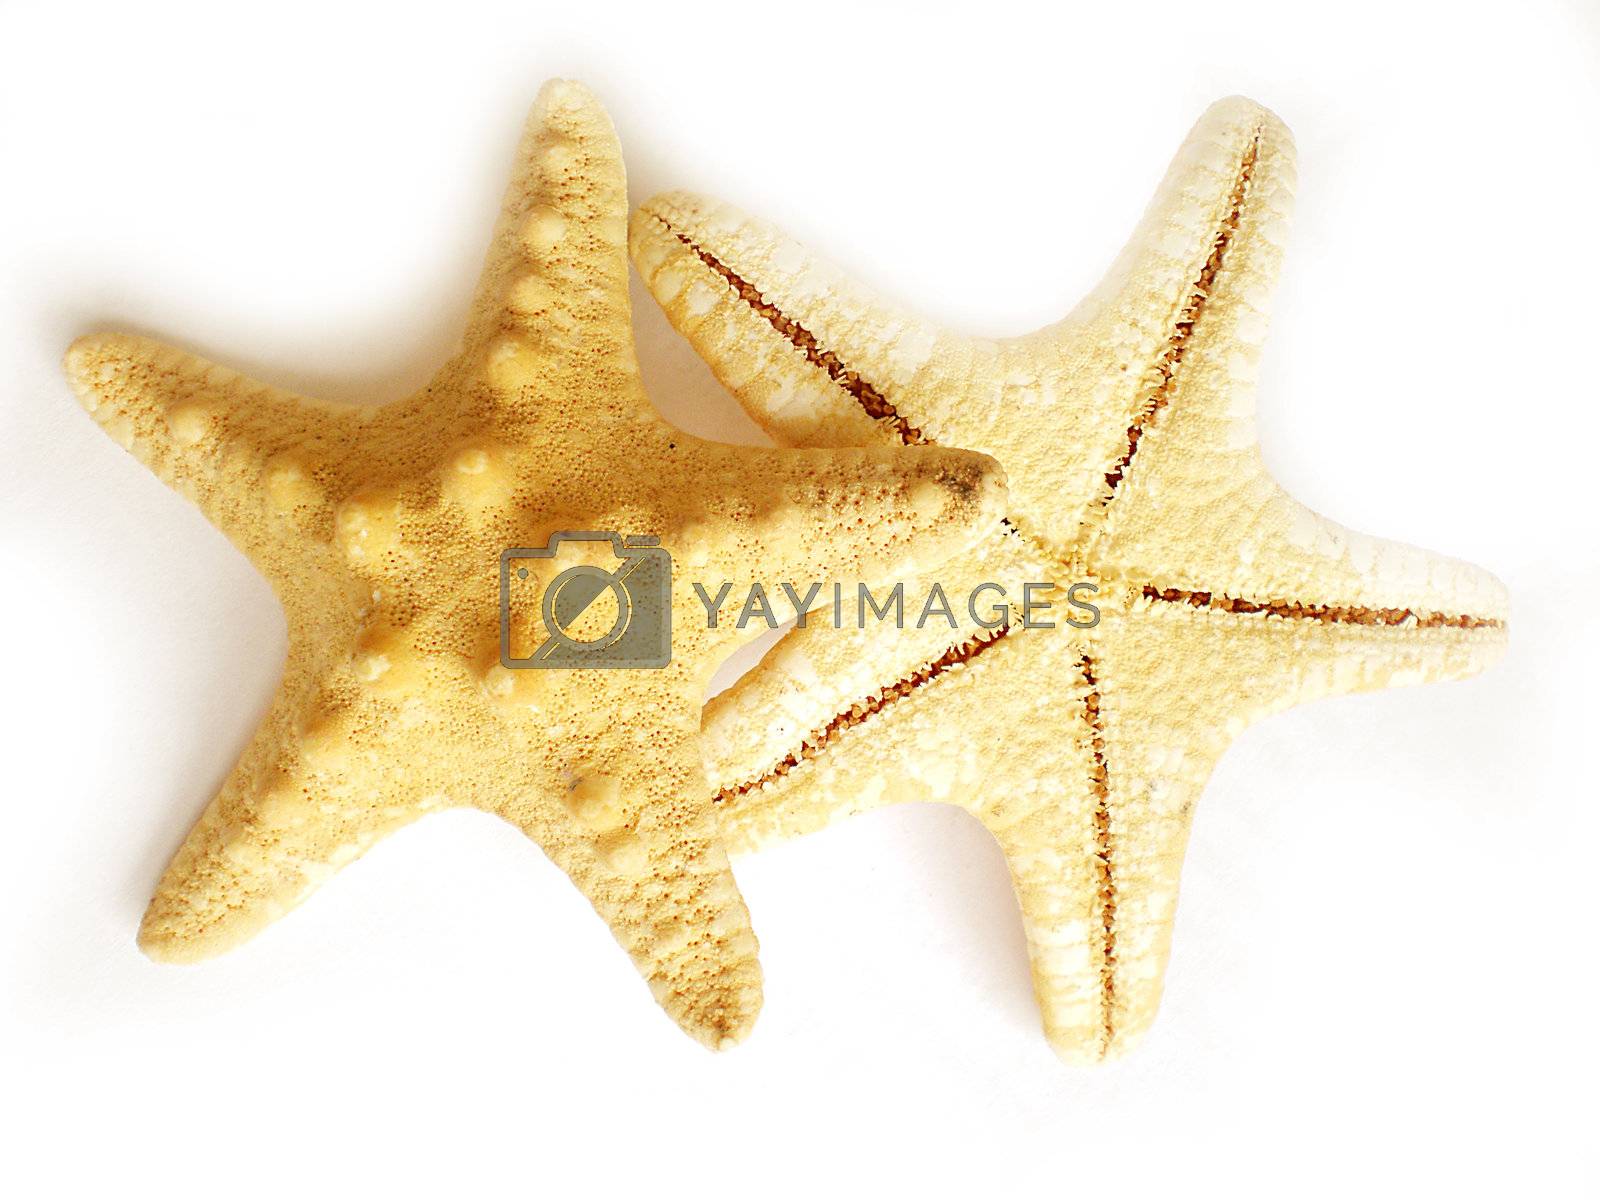 Royalty free image of starfish by Dessie_bg